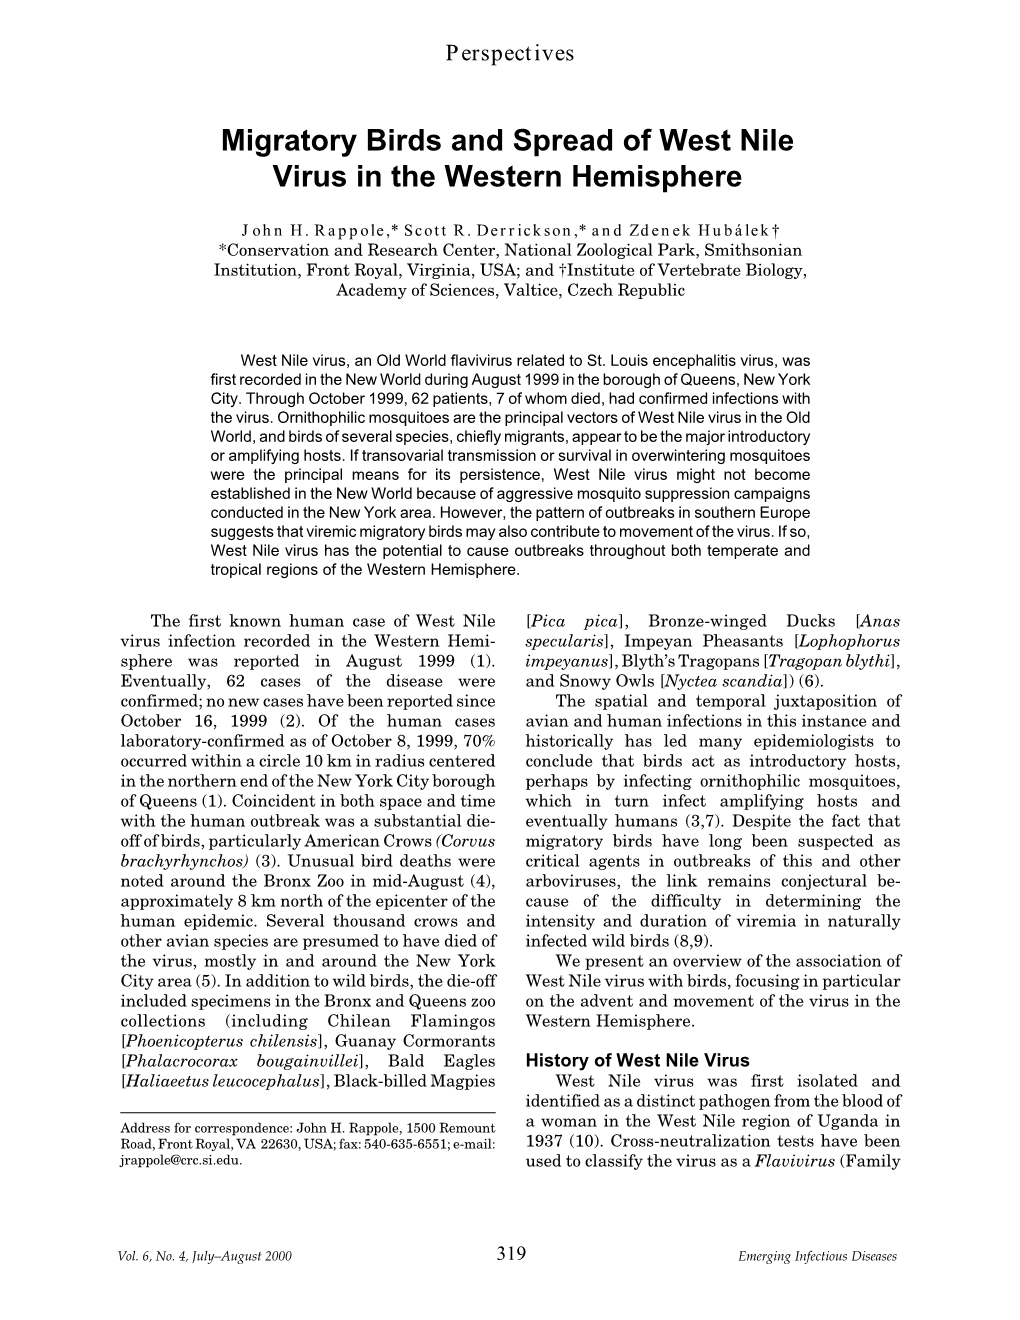 Migratory Birds and Spread of West Nile Virus in the Western Hemisphere